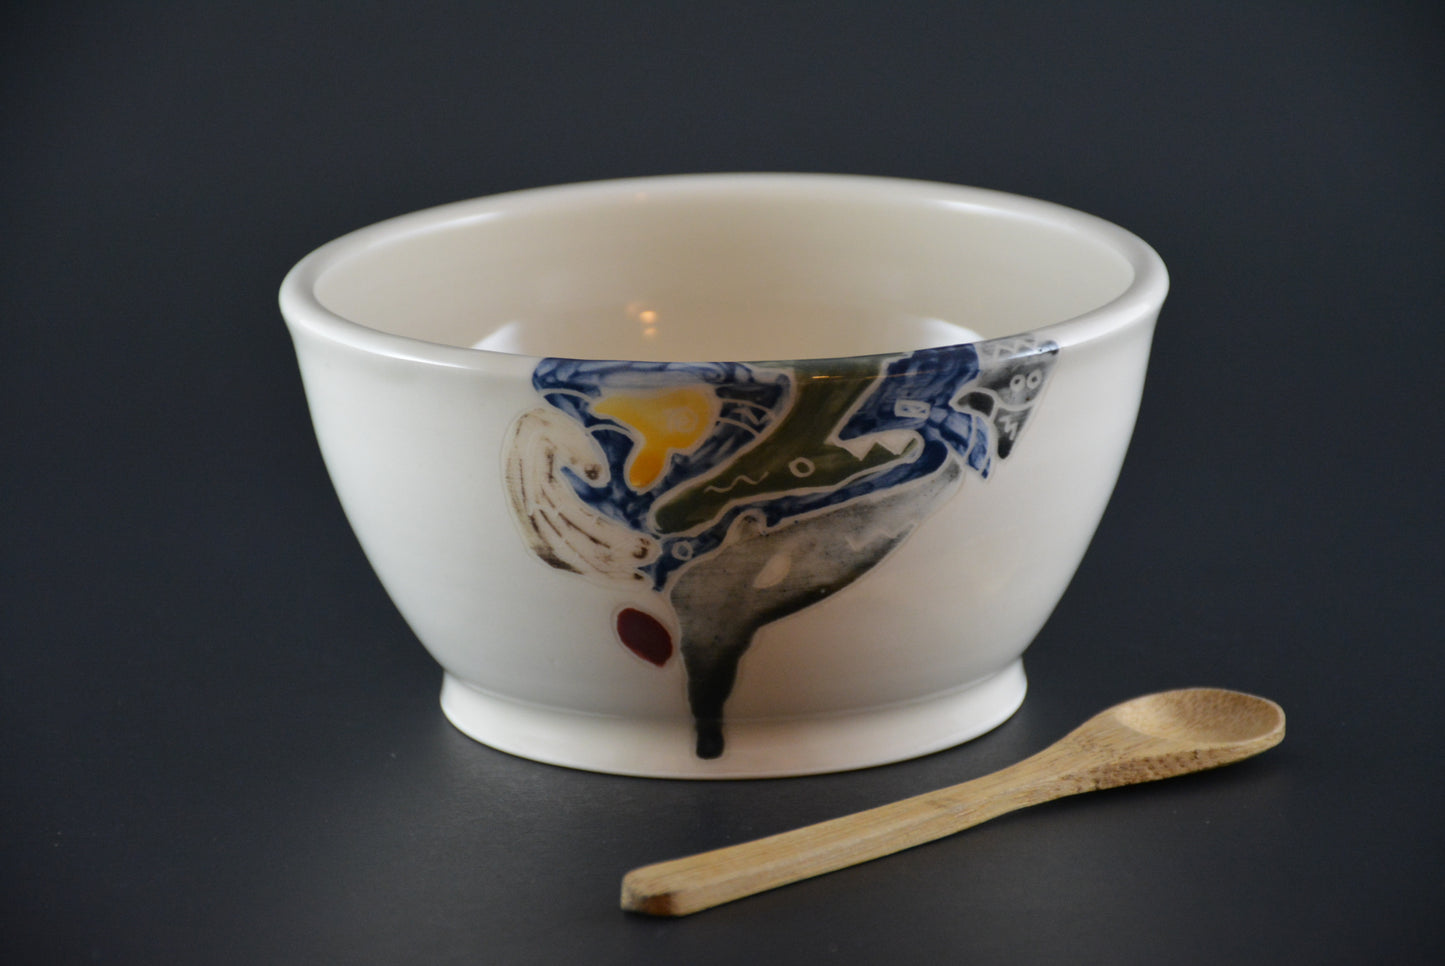 BL-05 Ceramic Bowl - Porcelain bowl